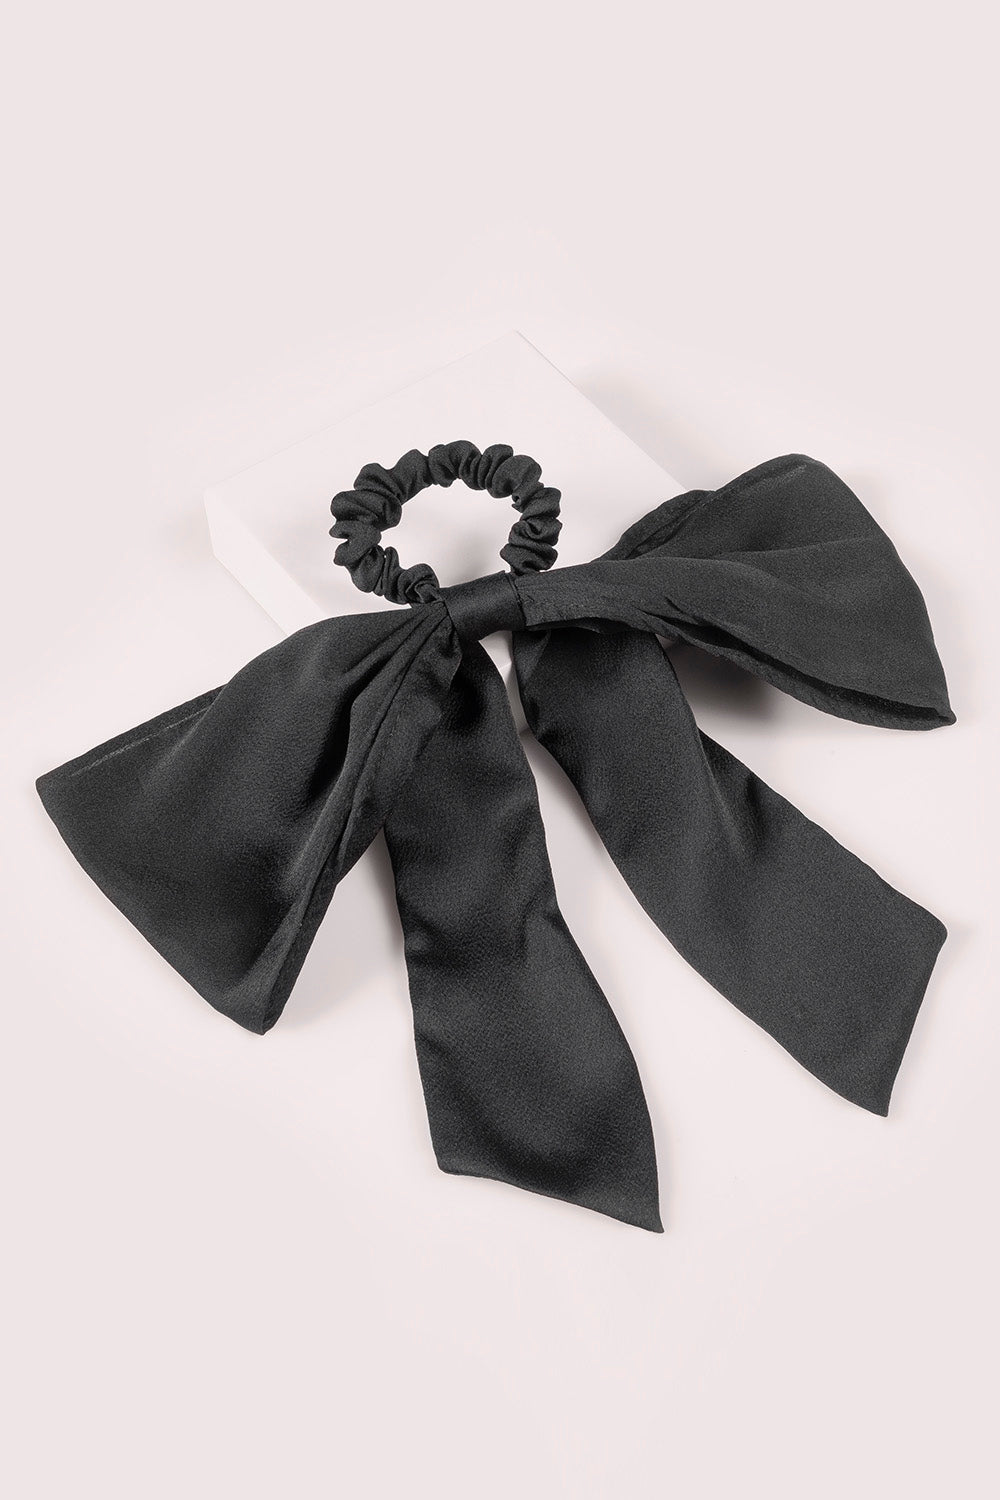 Black elastic velvet ribbon - Lace To Love